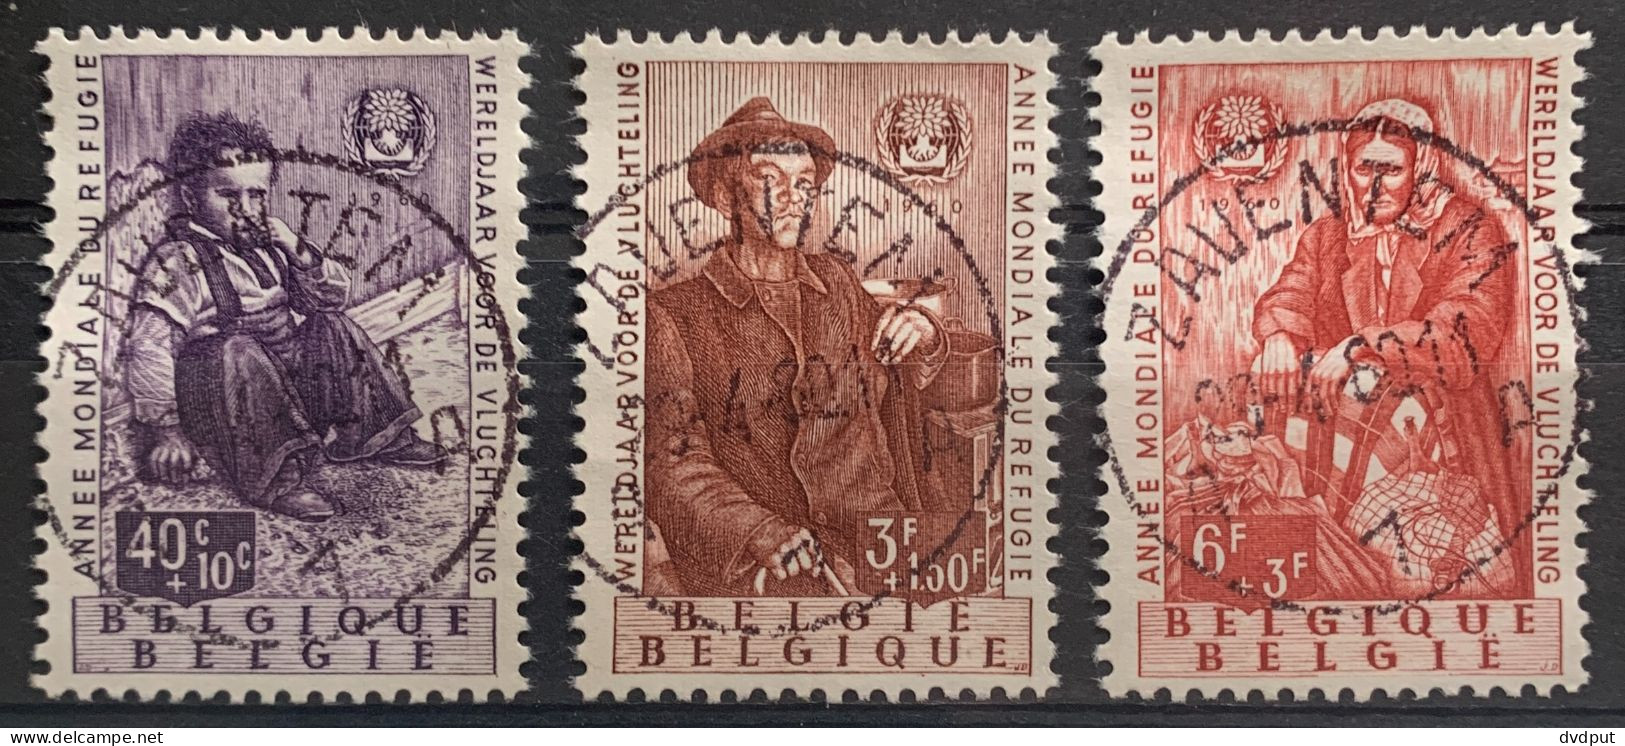 België, 1960, Nr 1128/30, Prachtig Gestempeld ZAVENTEM, OBP 60€ - Gebruikt